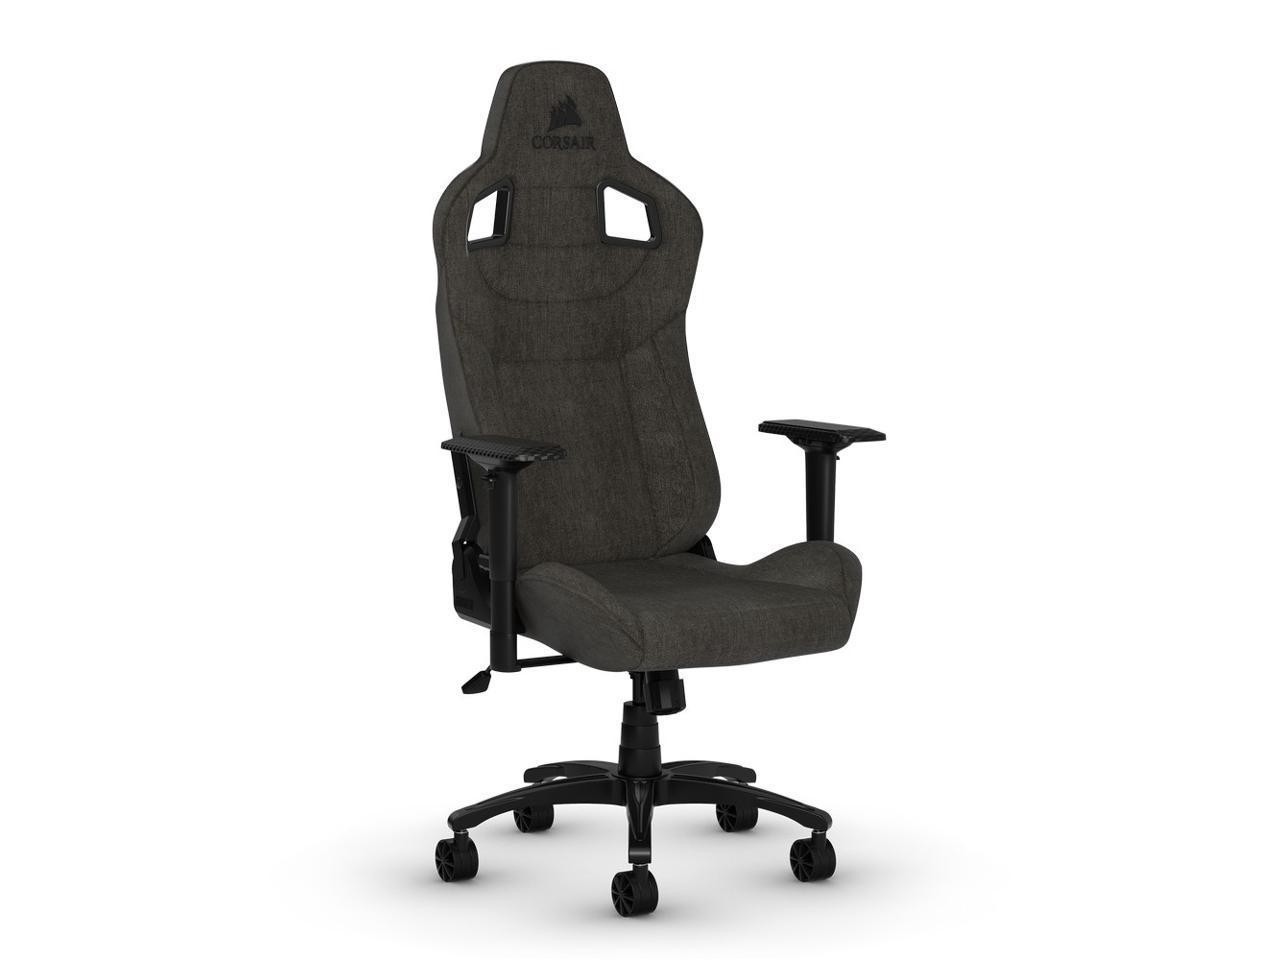 Corsair T3 Rush Gaming Chair - Charcoal Fabric - CF-9010057-WW - image 3 of 4